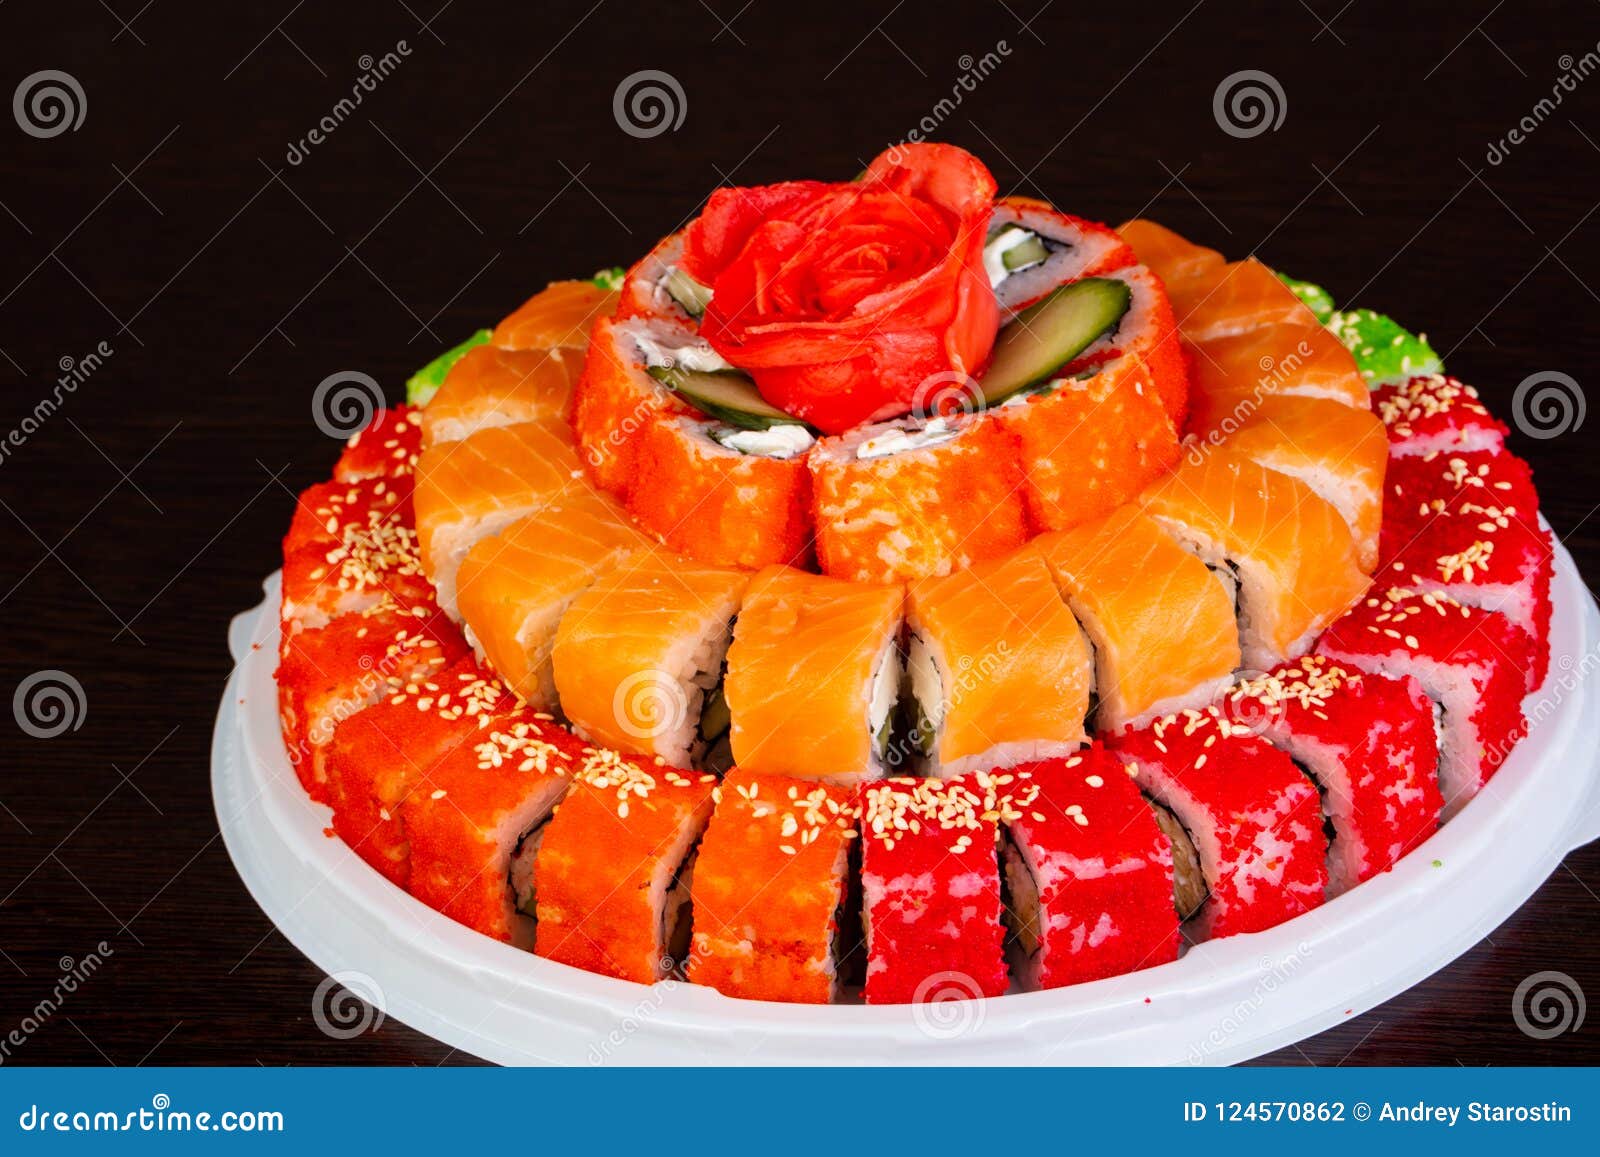 Торт из суши и роллов заказать иркутск фото 1